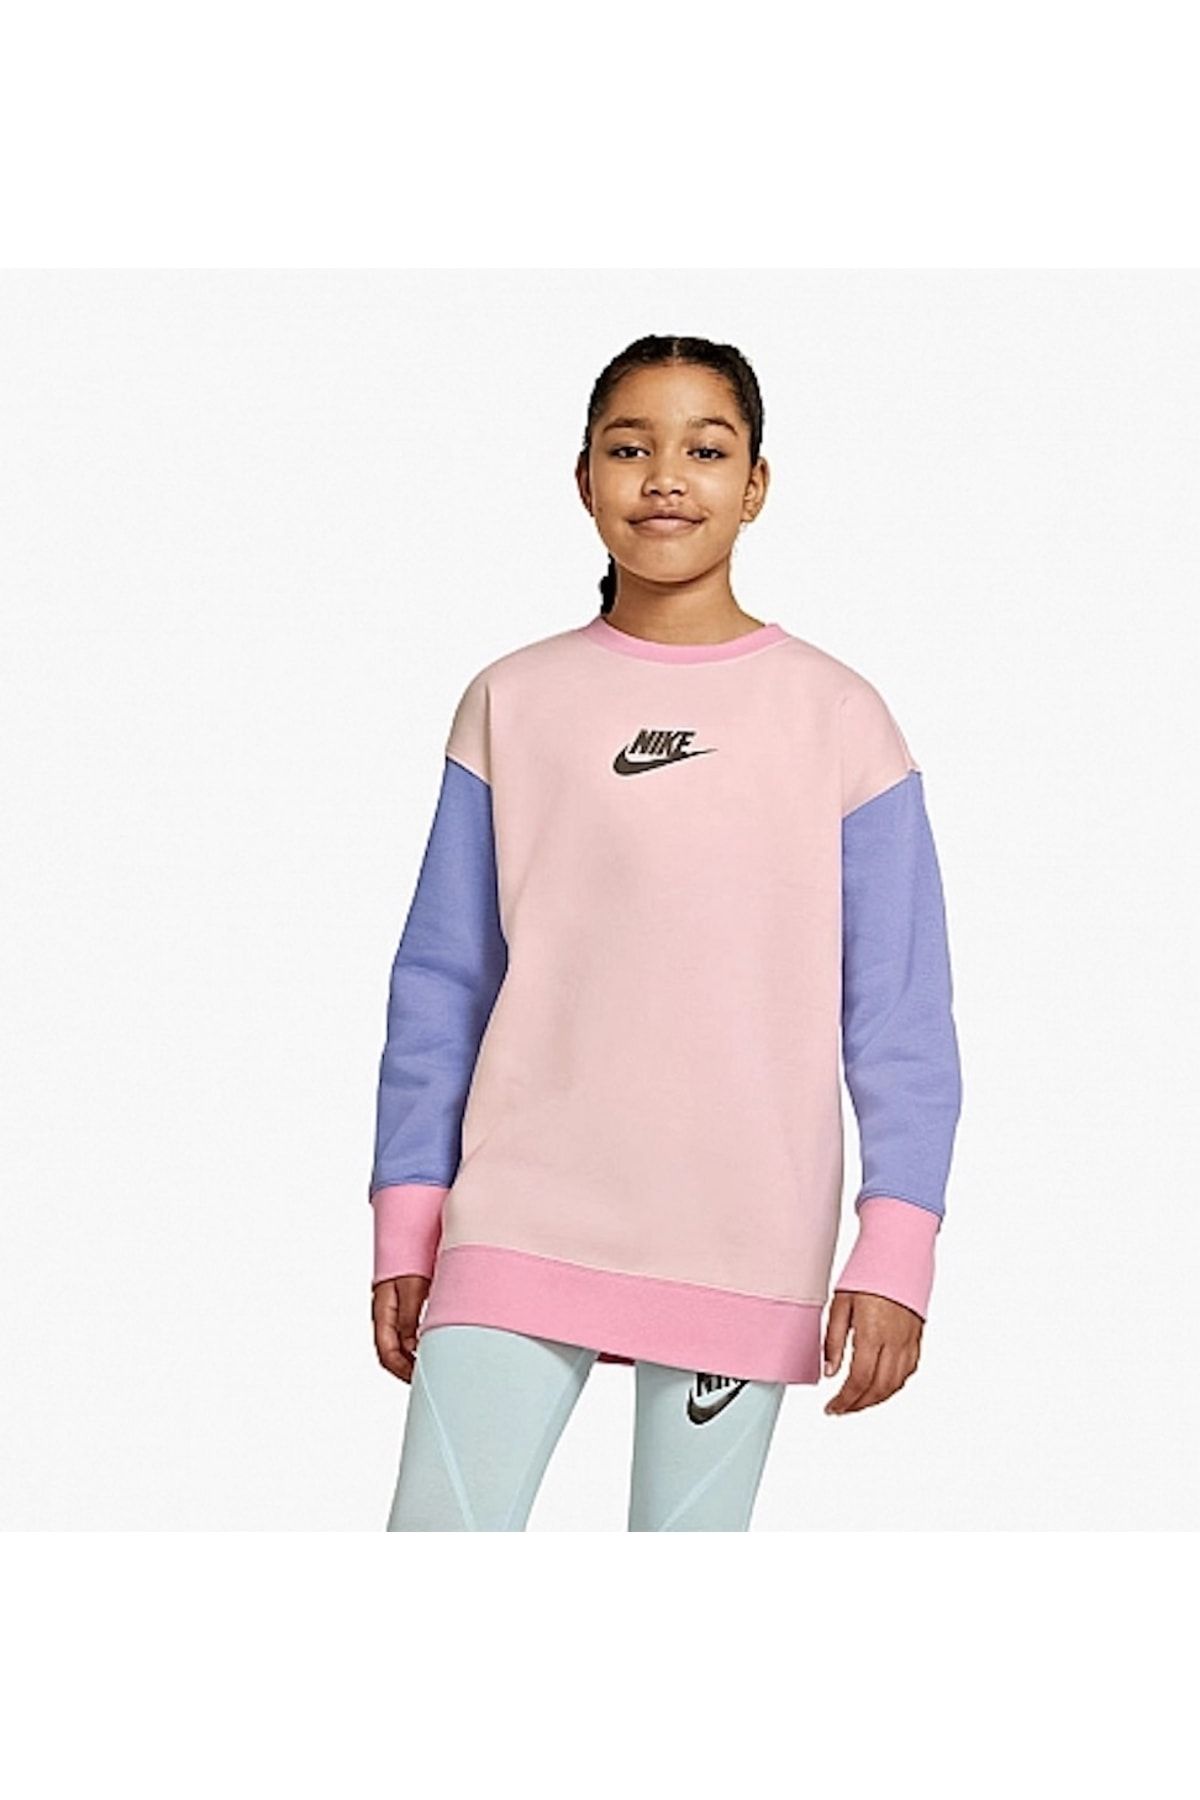 Nike Kız Çocuk Renkli Sweatshirt - Dd3782-805